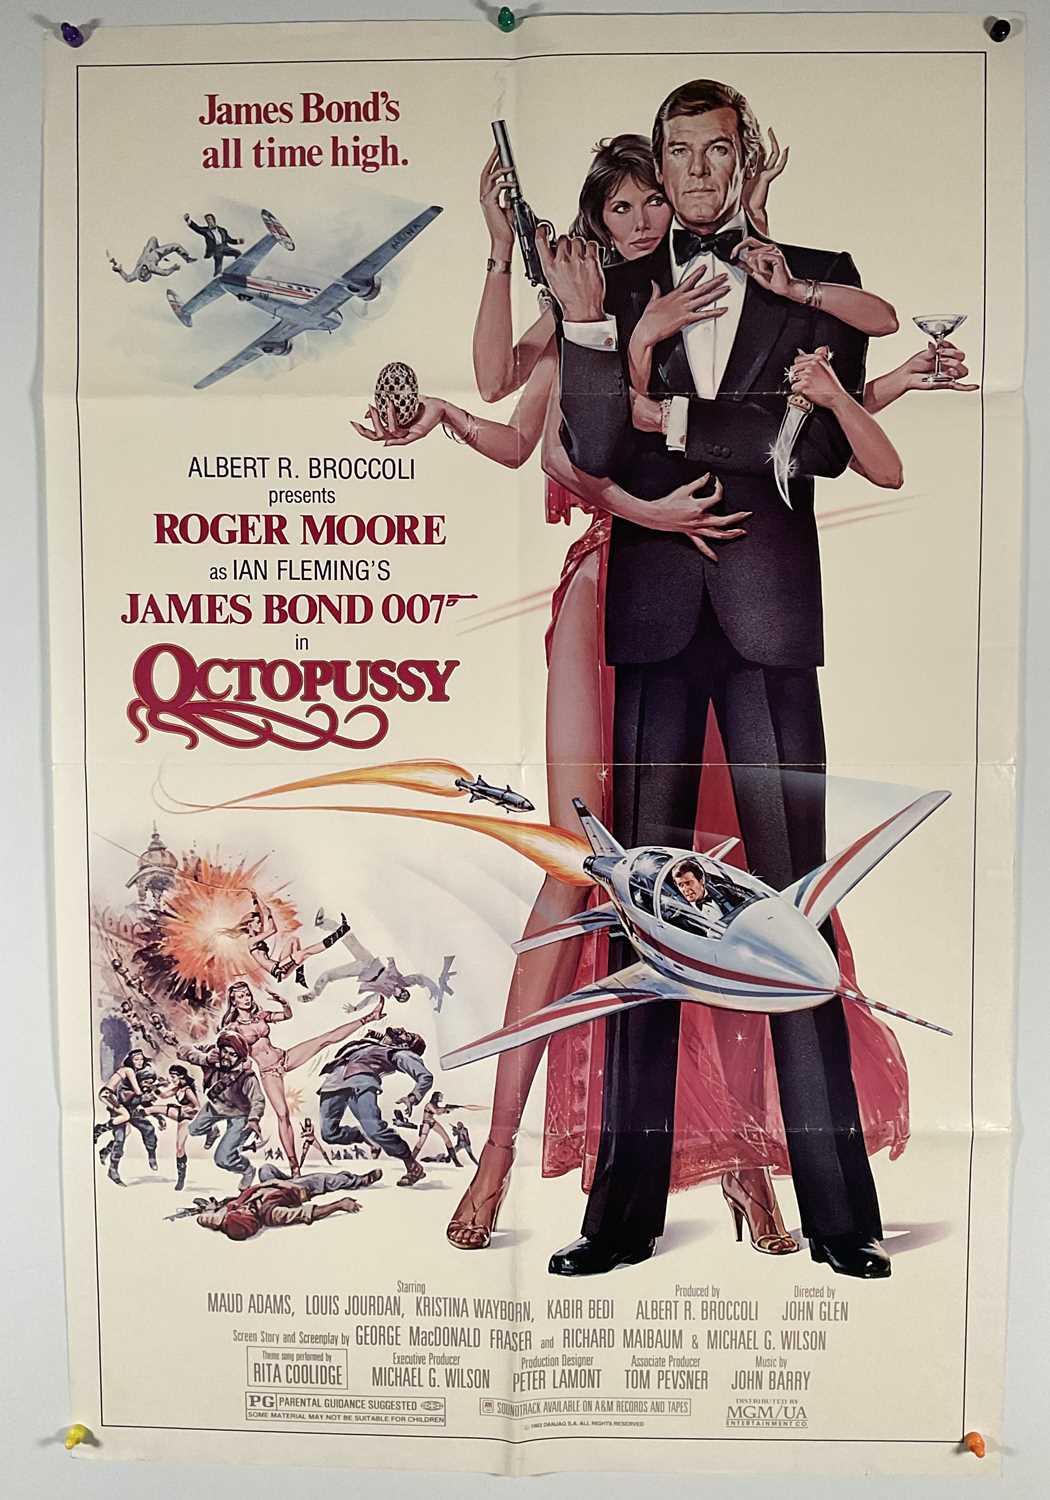 OCTOPUSSY (1983) US One sheet, Roger Moore as James Bond, Dan Goozee artwork, folded.